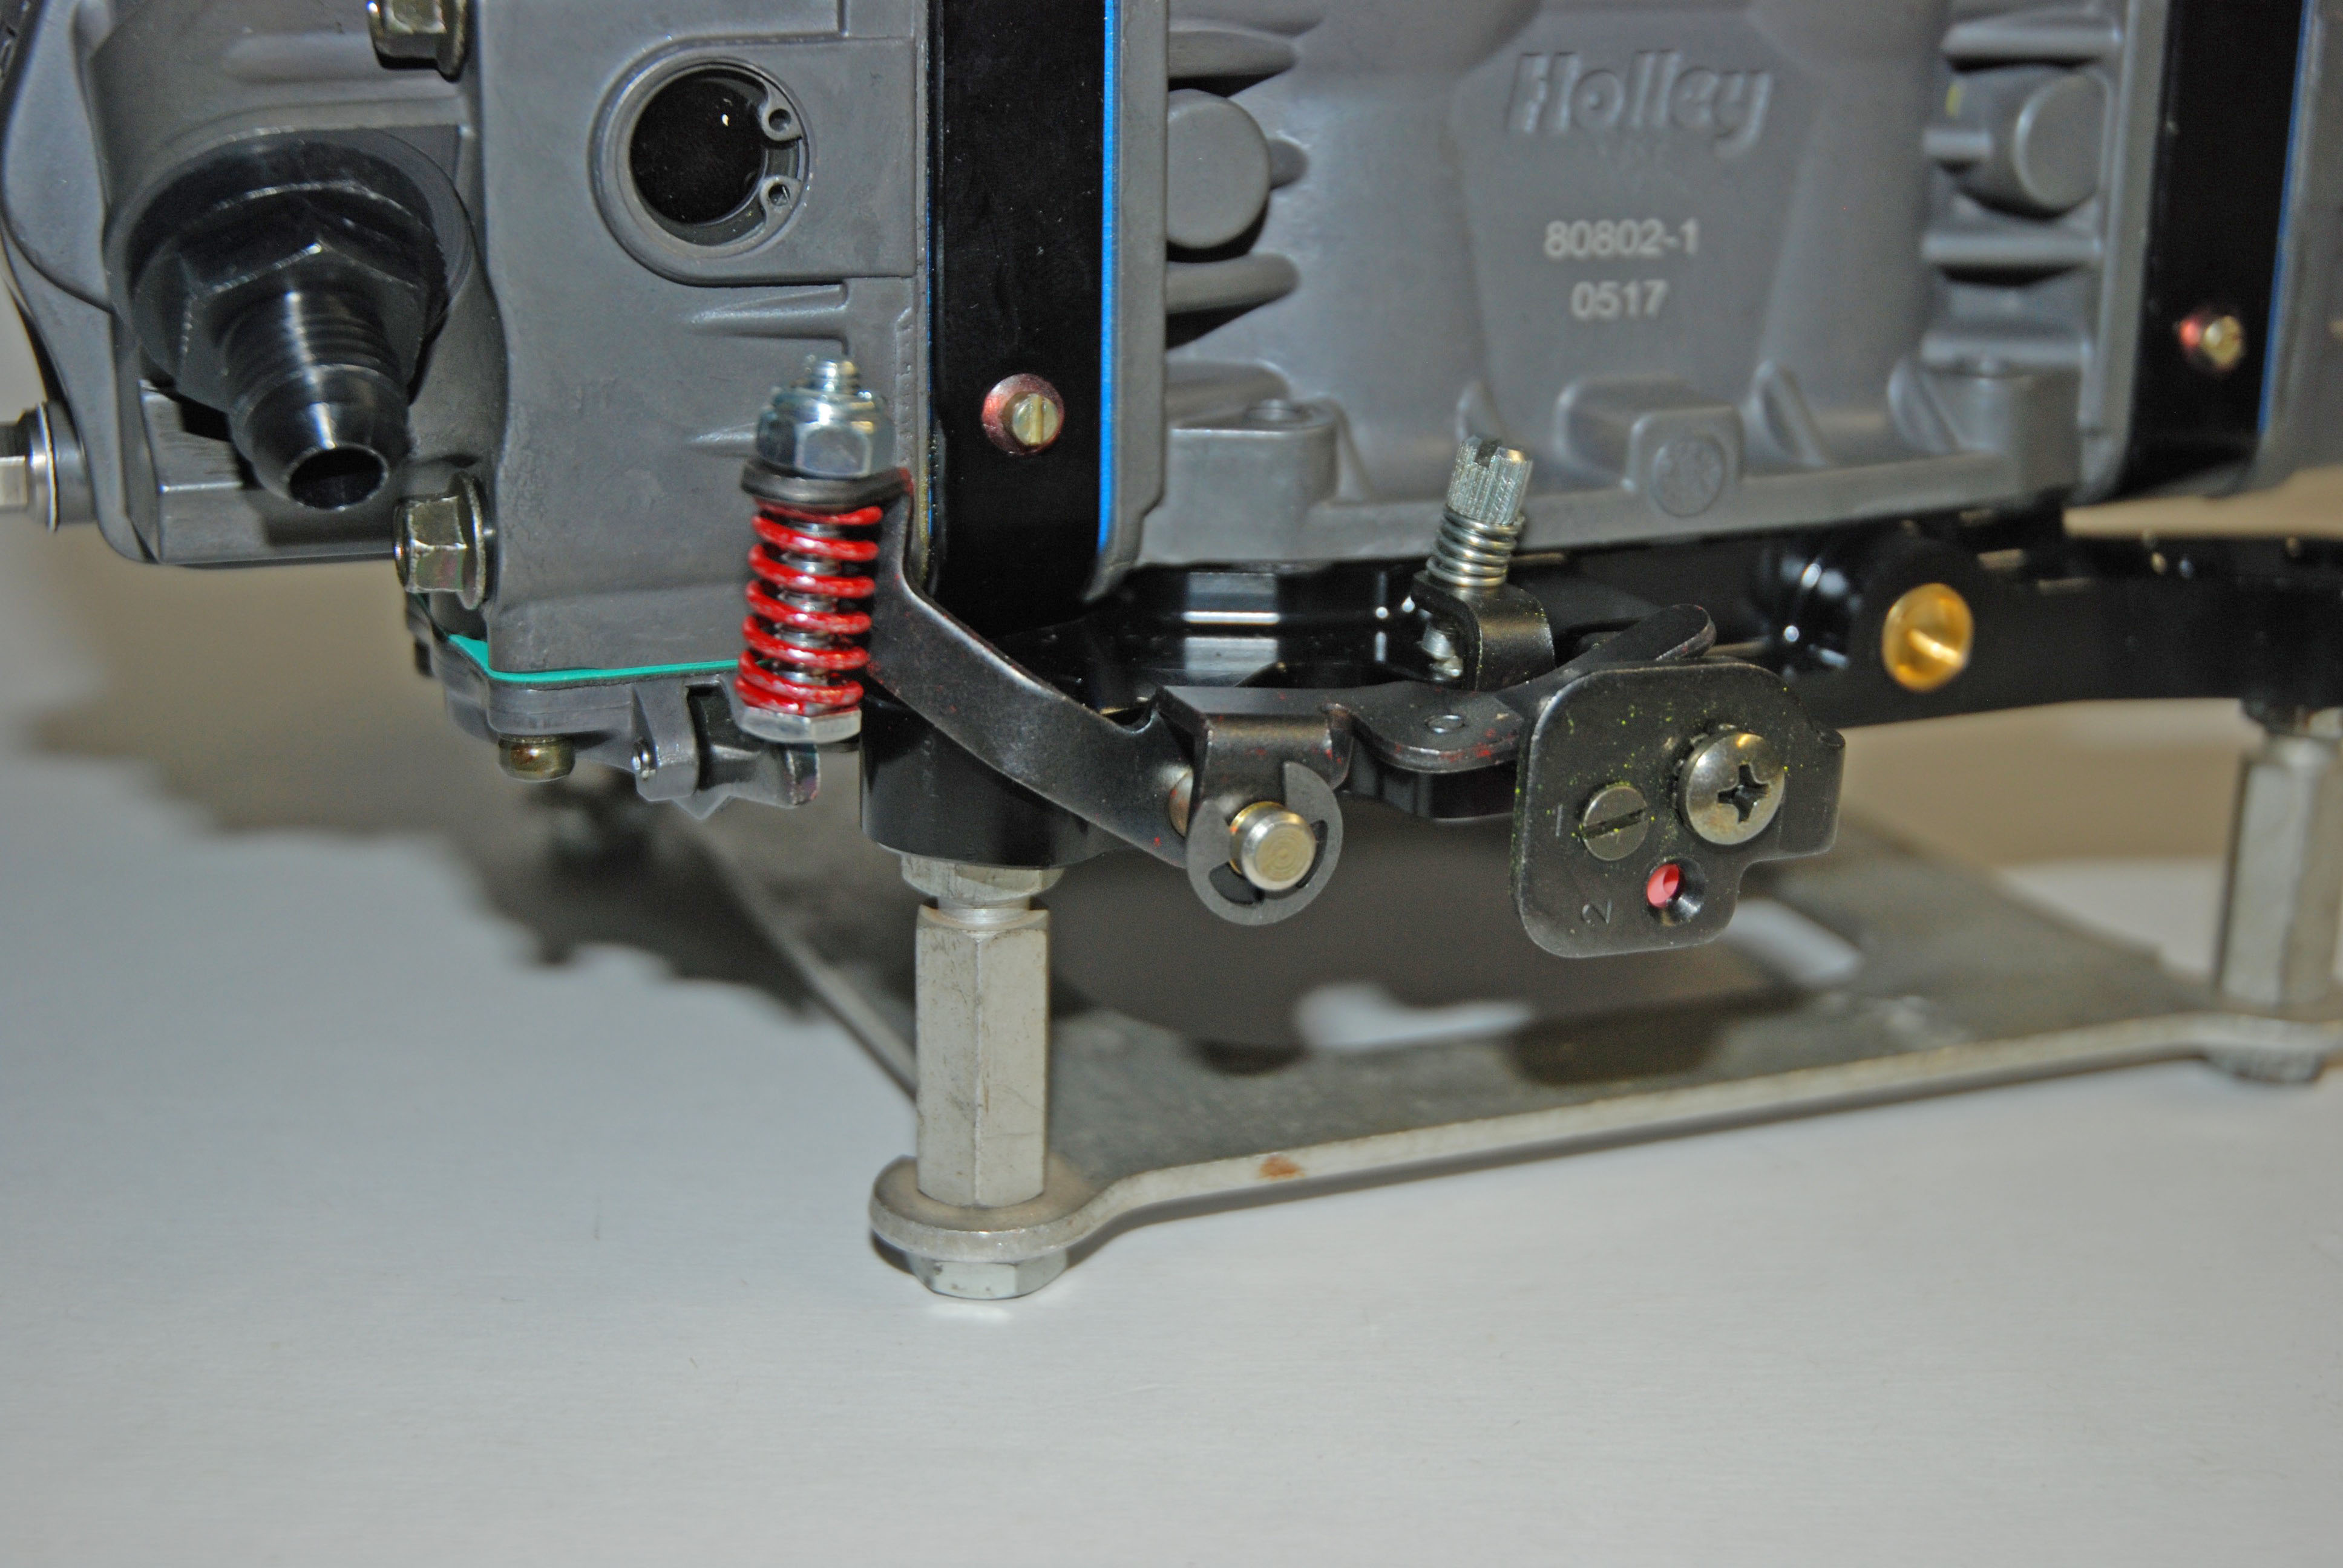 Holley Carburetor Accelerator Pump, Tuning a Carburetor, Tech, How To,